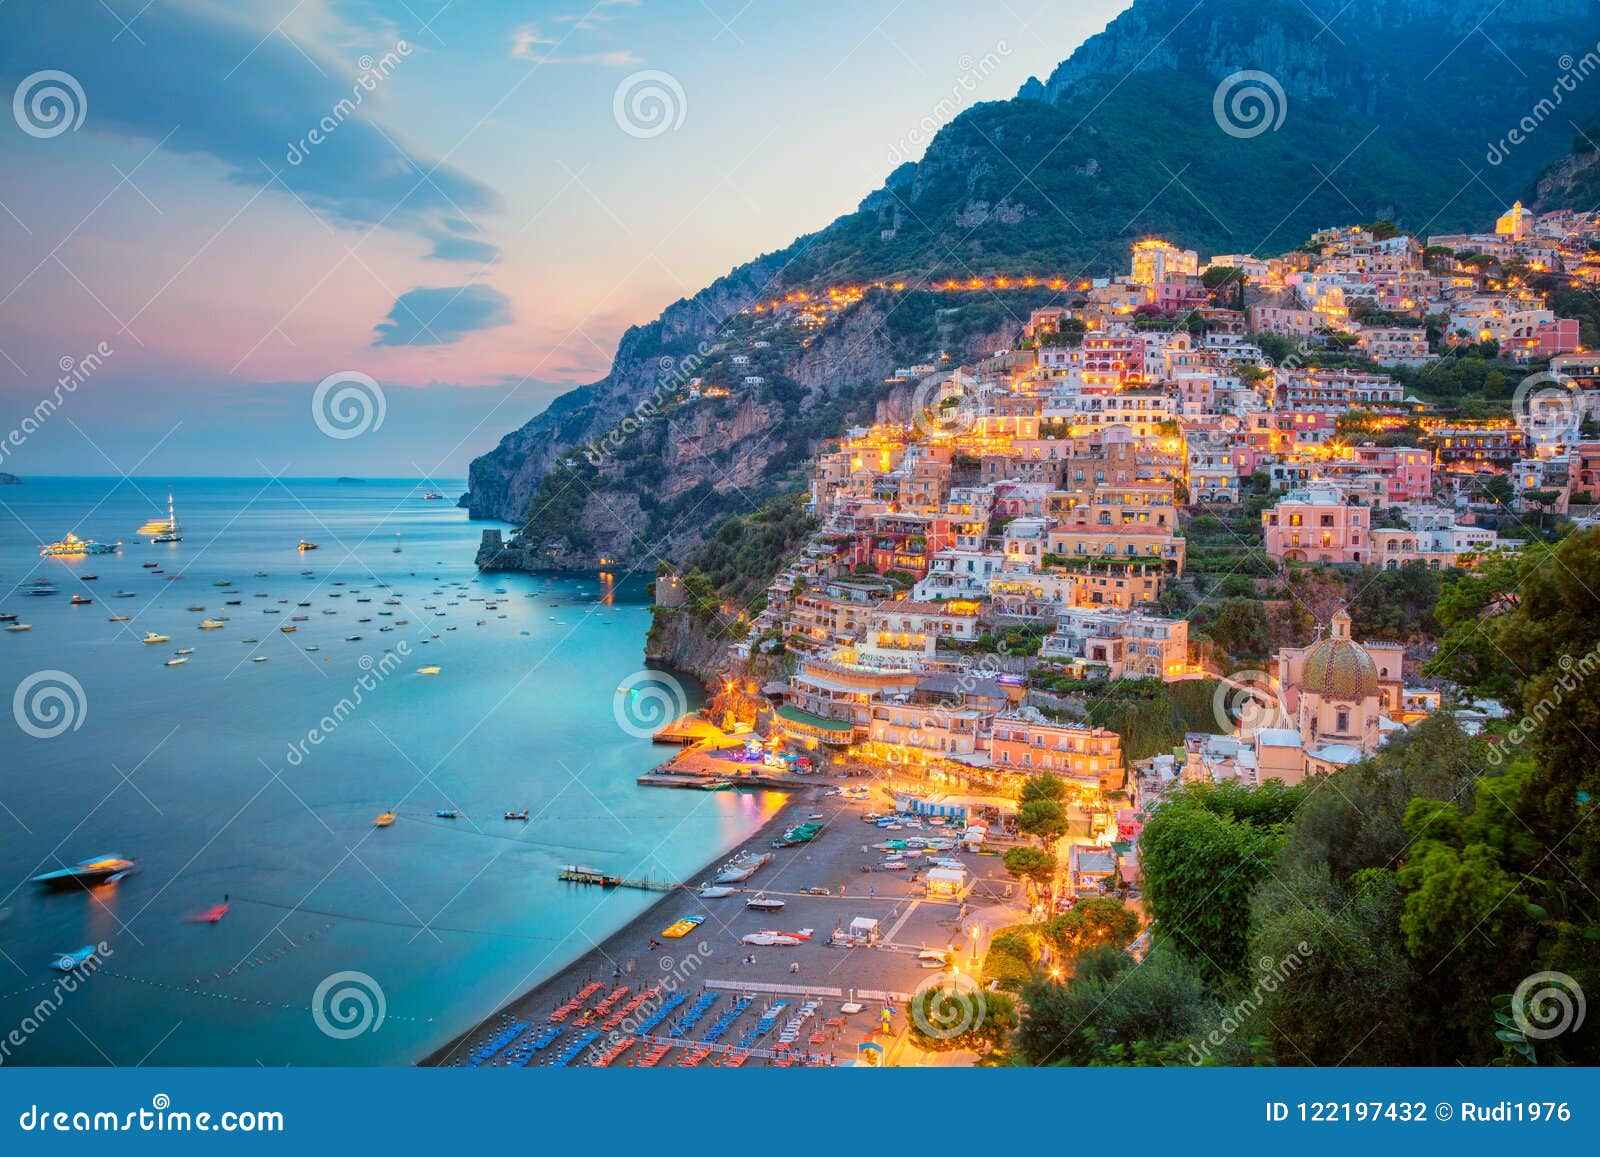 City of Positano, Italy. stock photo. Image of aerial - 122197432